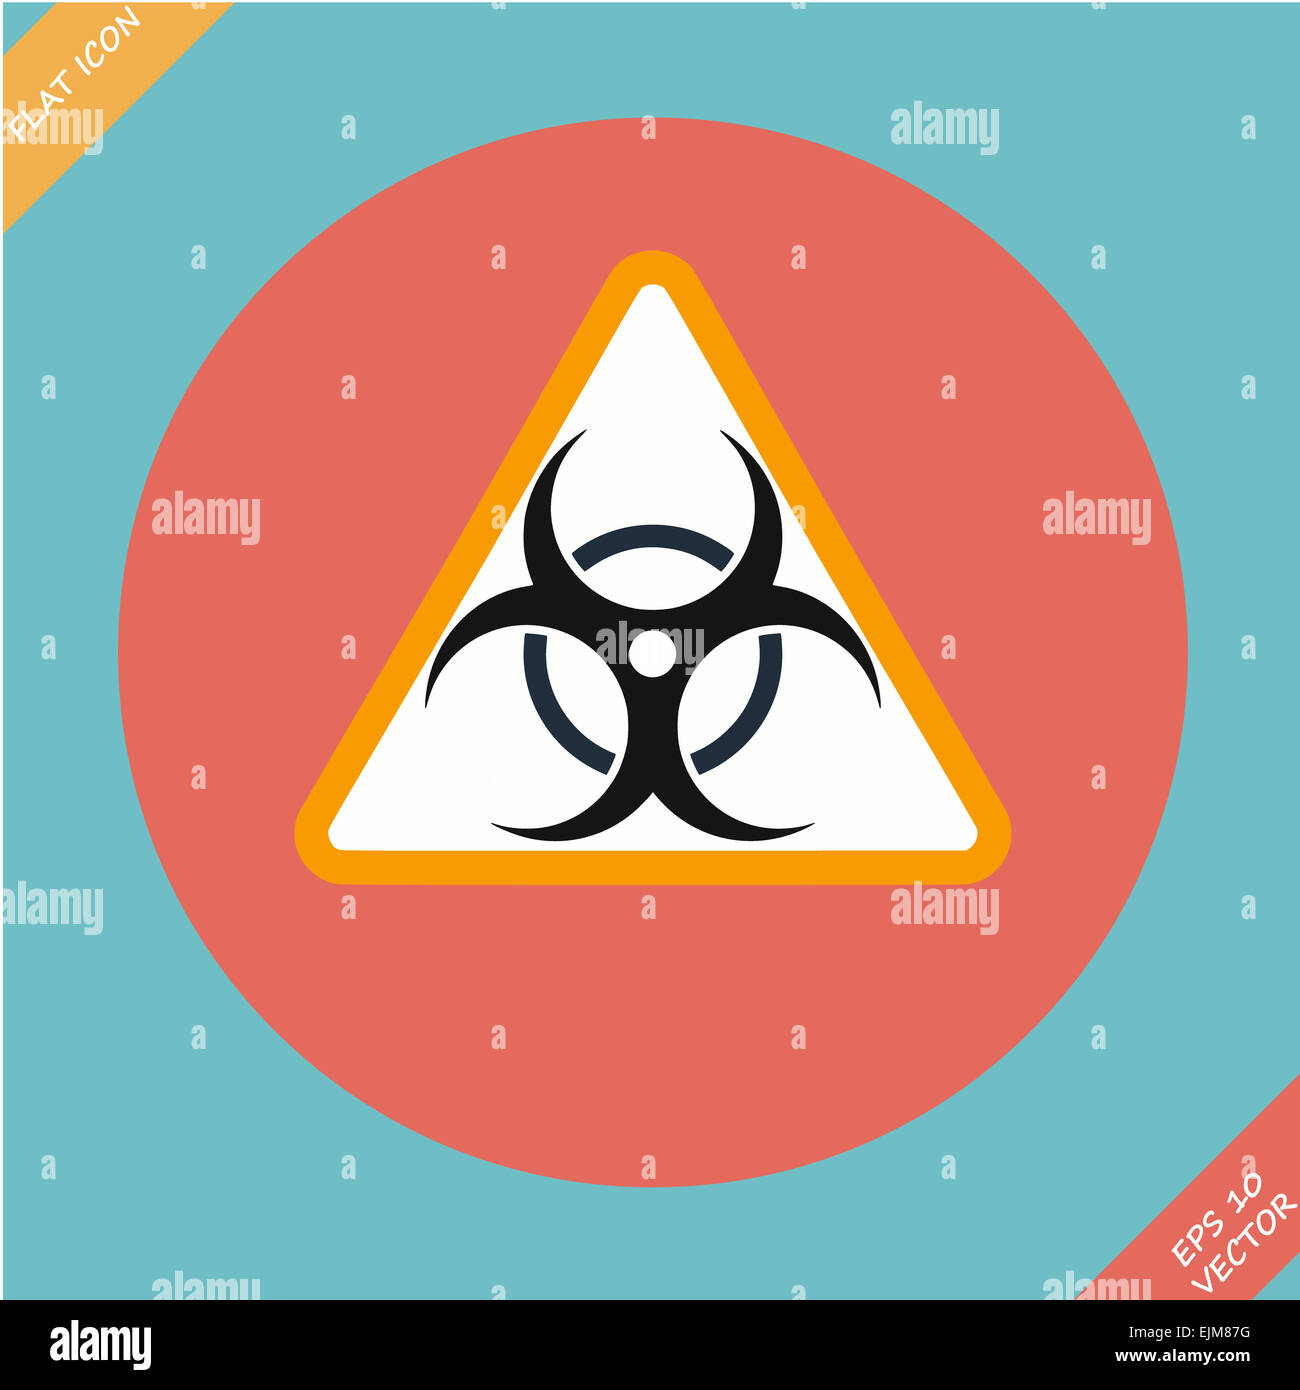 Warning symbol biohazard - vector illustration Stock Photo